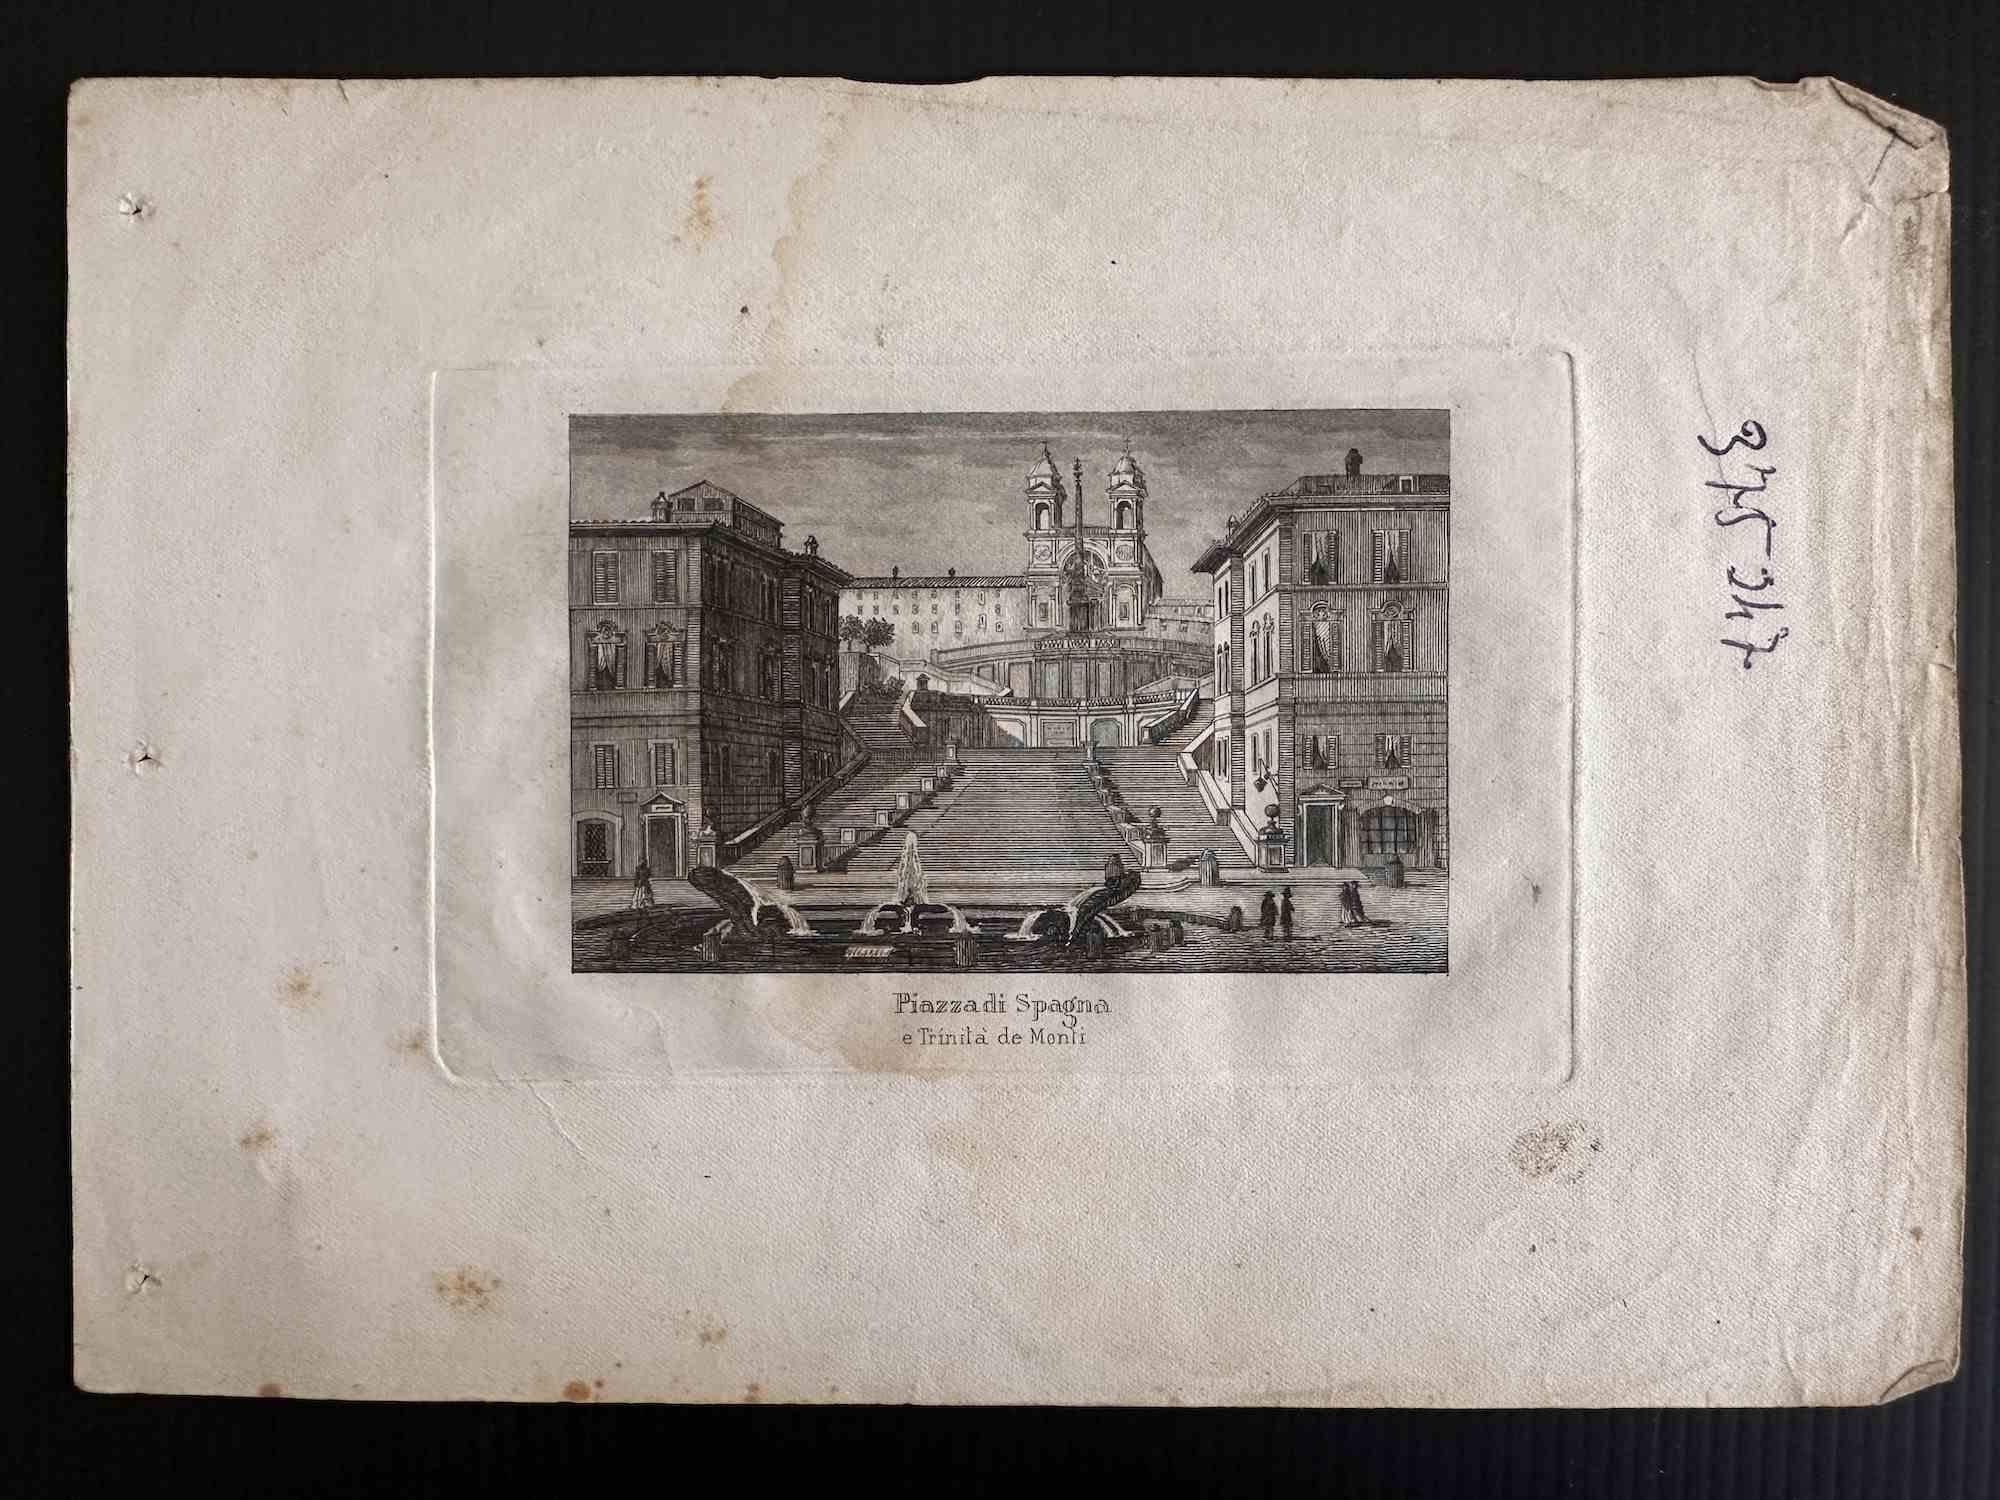 Unknown Landscape Print - Piazza di Spagna - Italy - Lithograph - Late 19th century